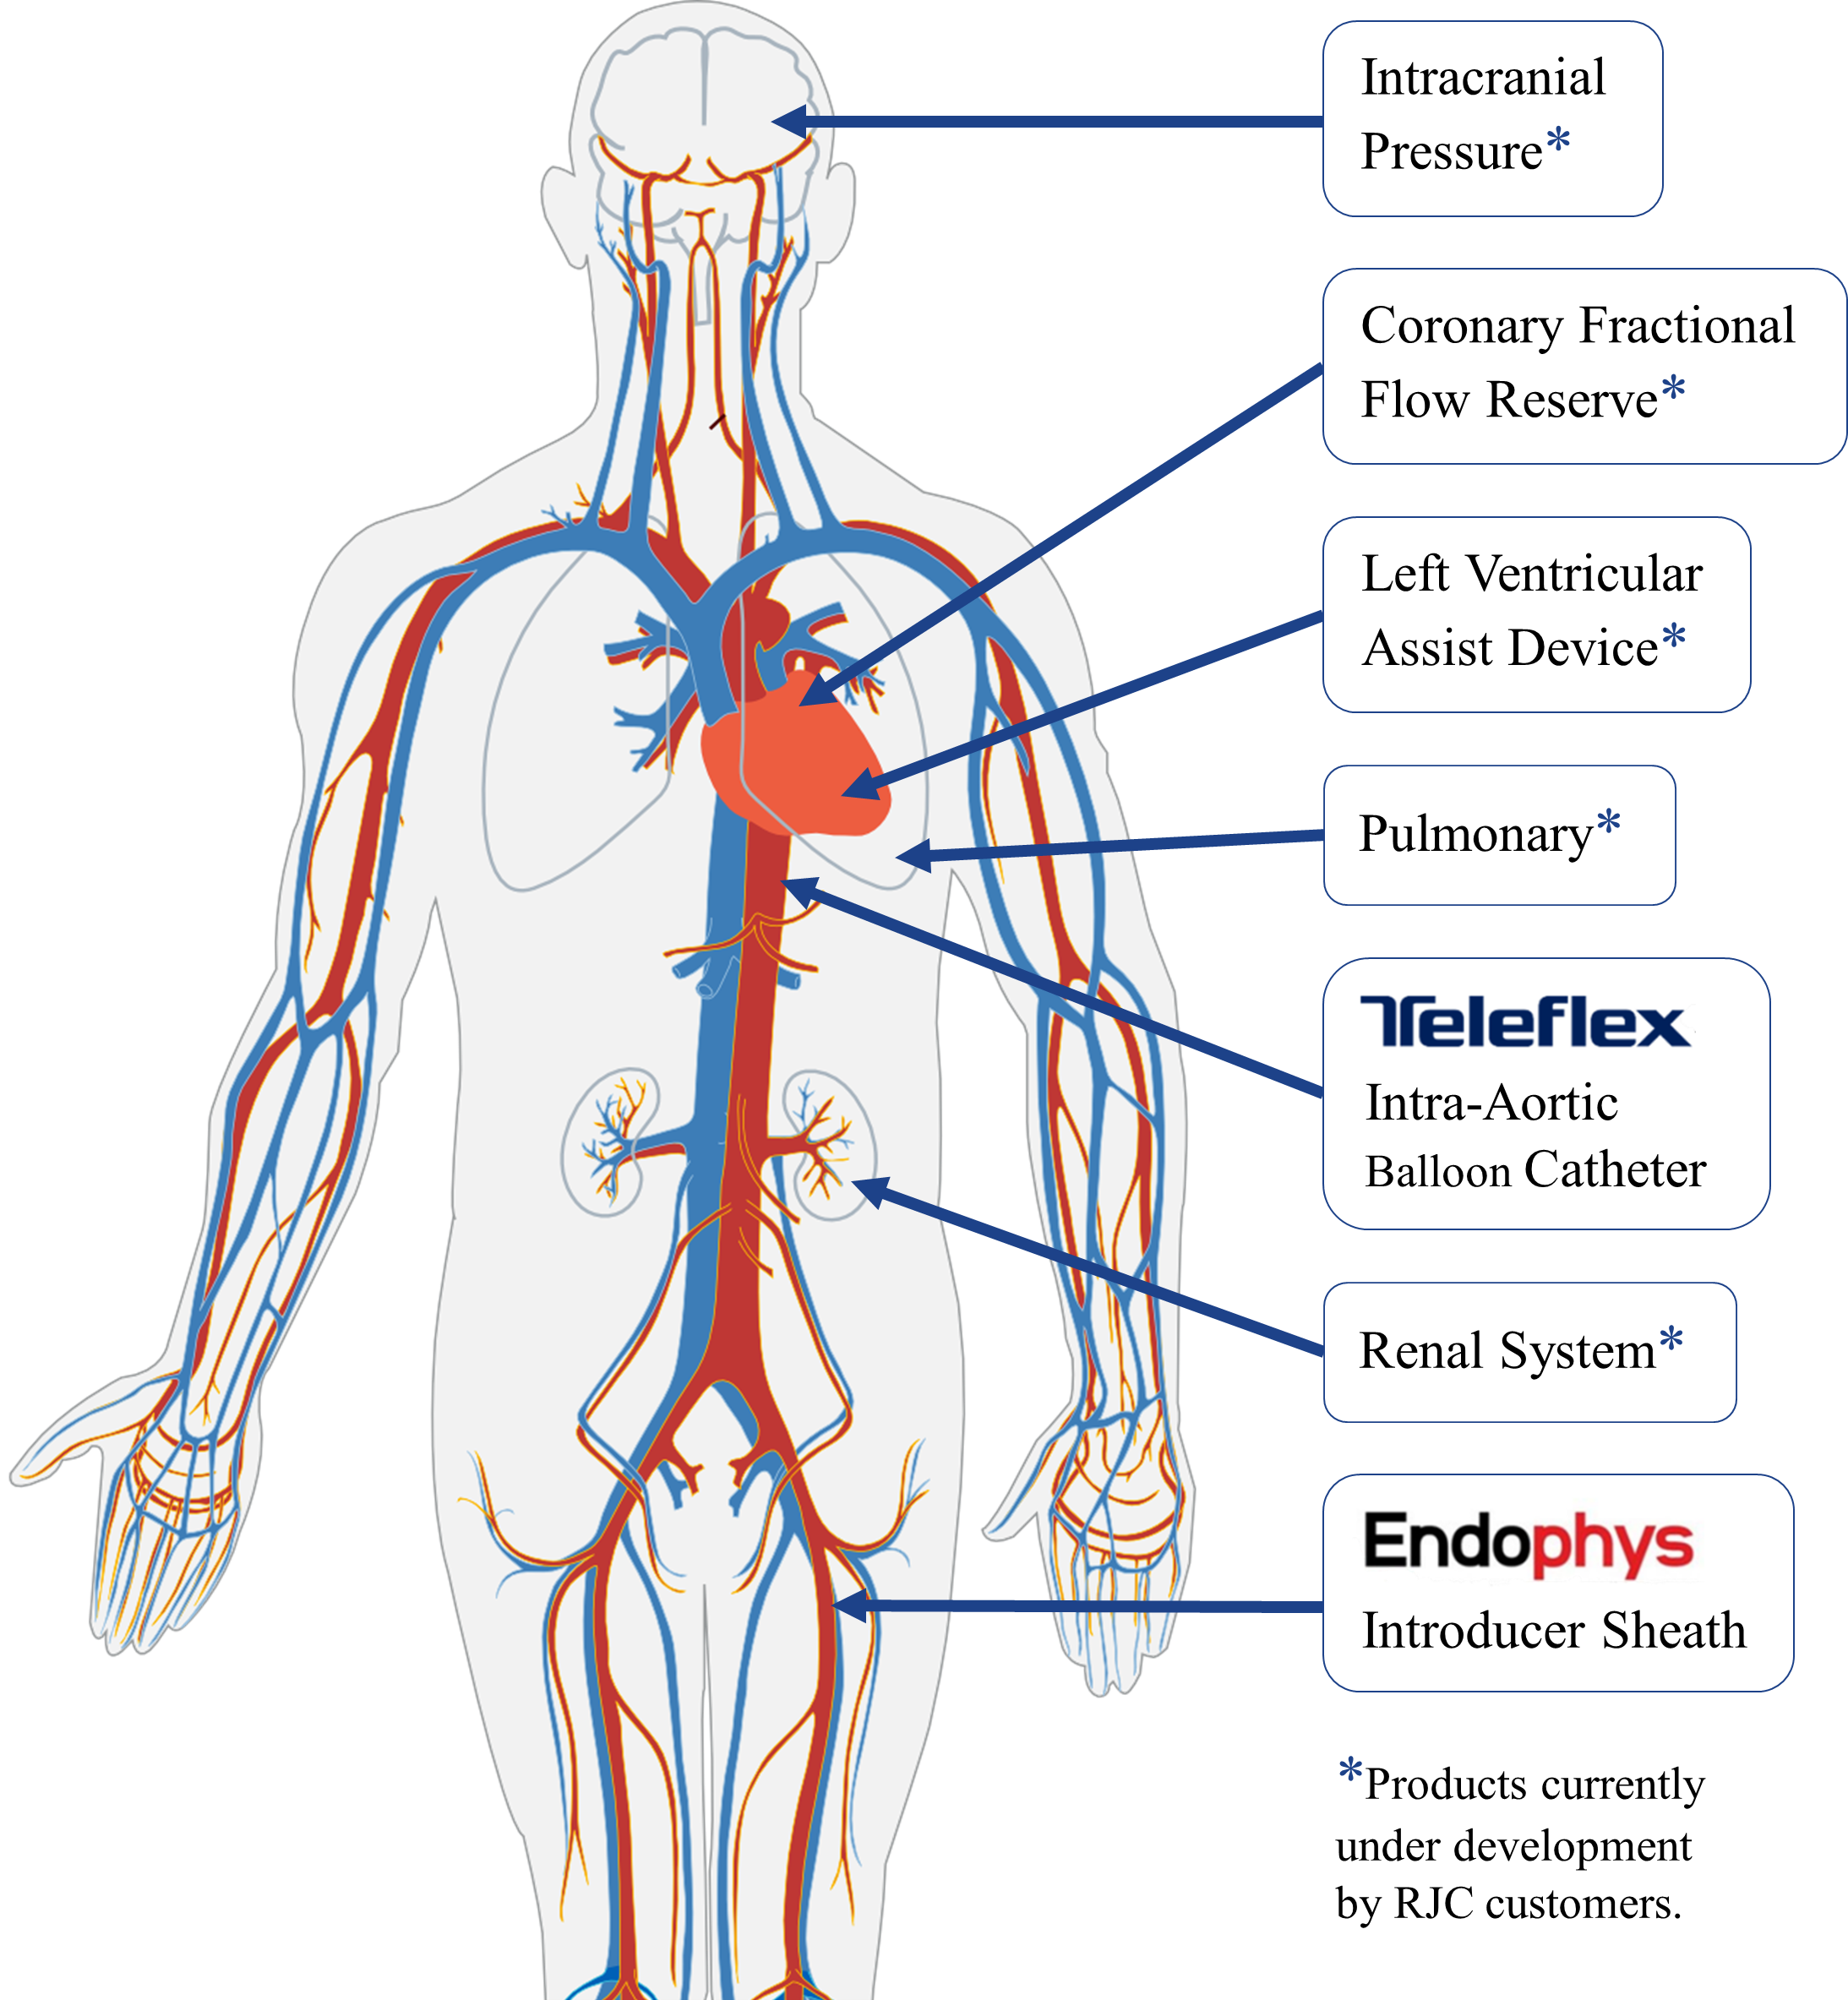 Pressure sensor applications in the human body.